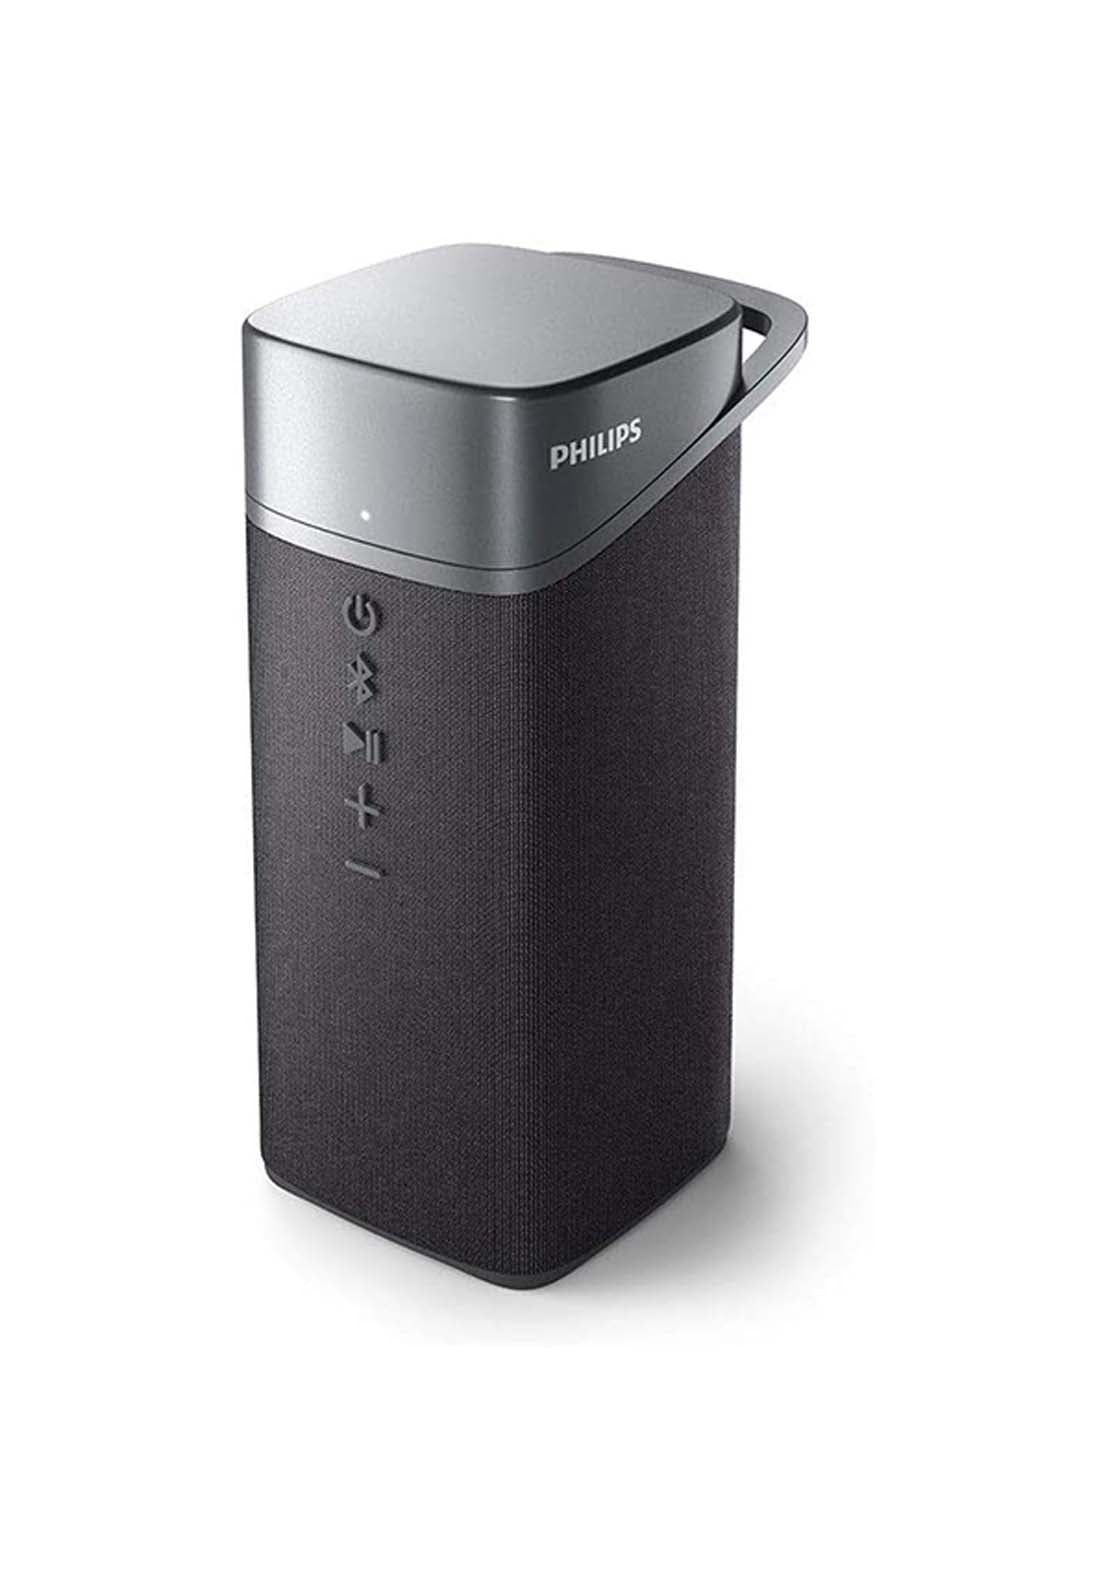 Philips Bluetooth Speaker | Tas350500 1 Shaws Department Stores